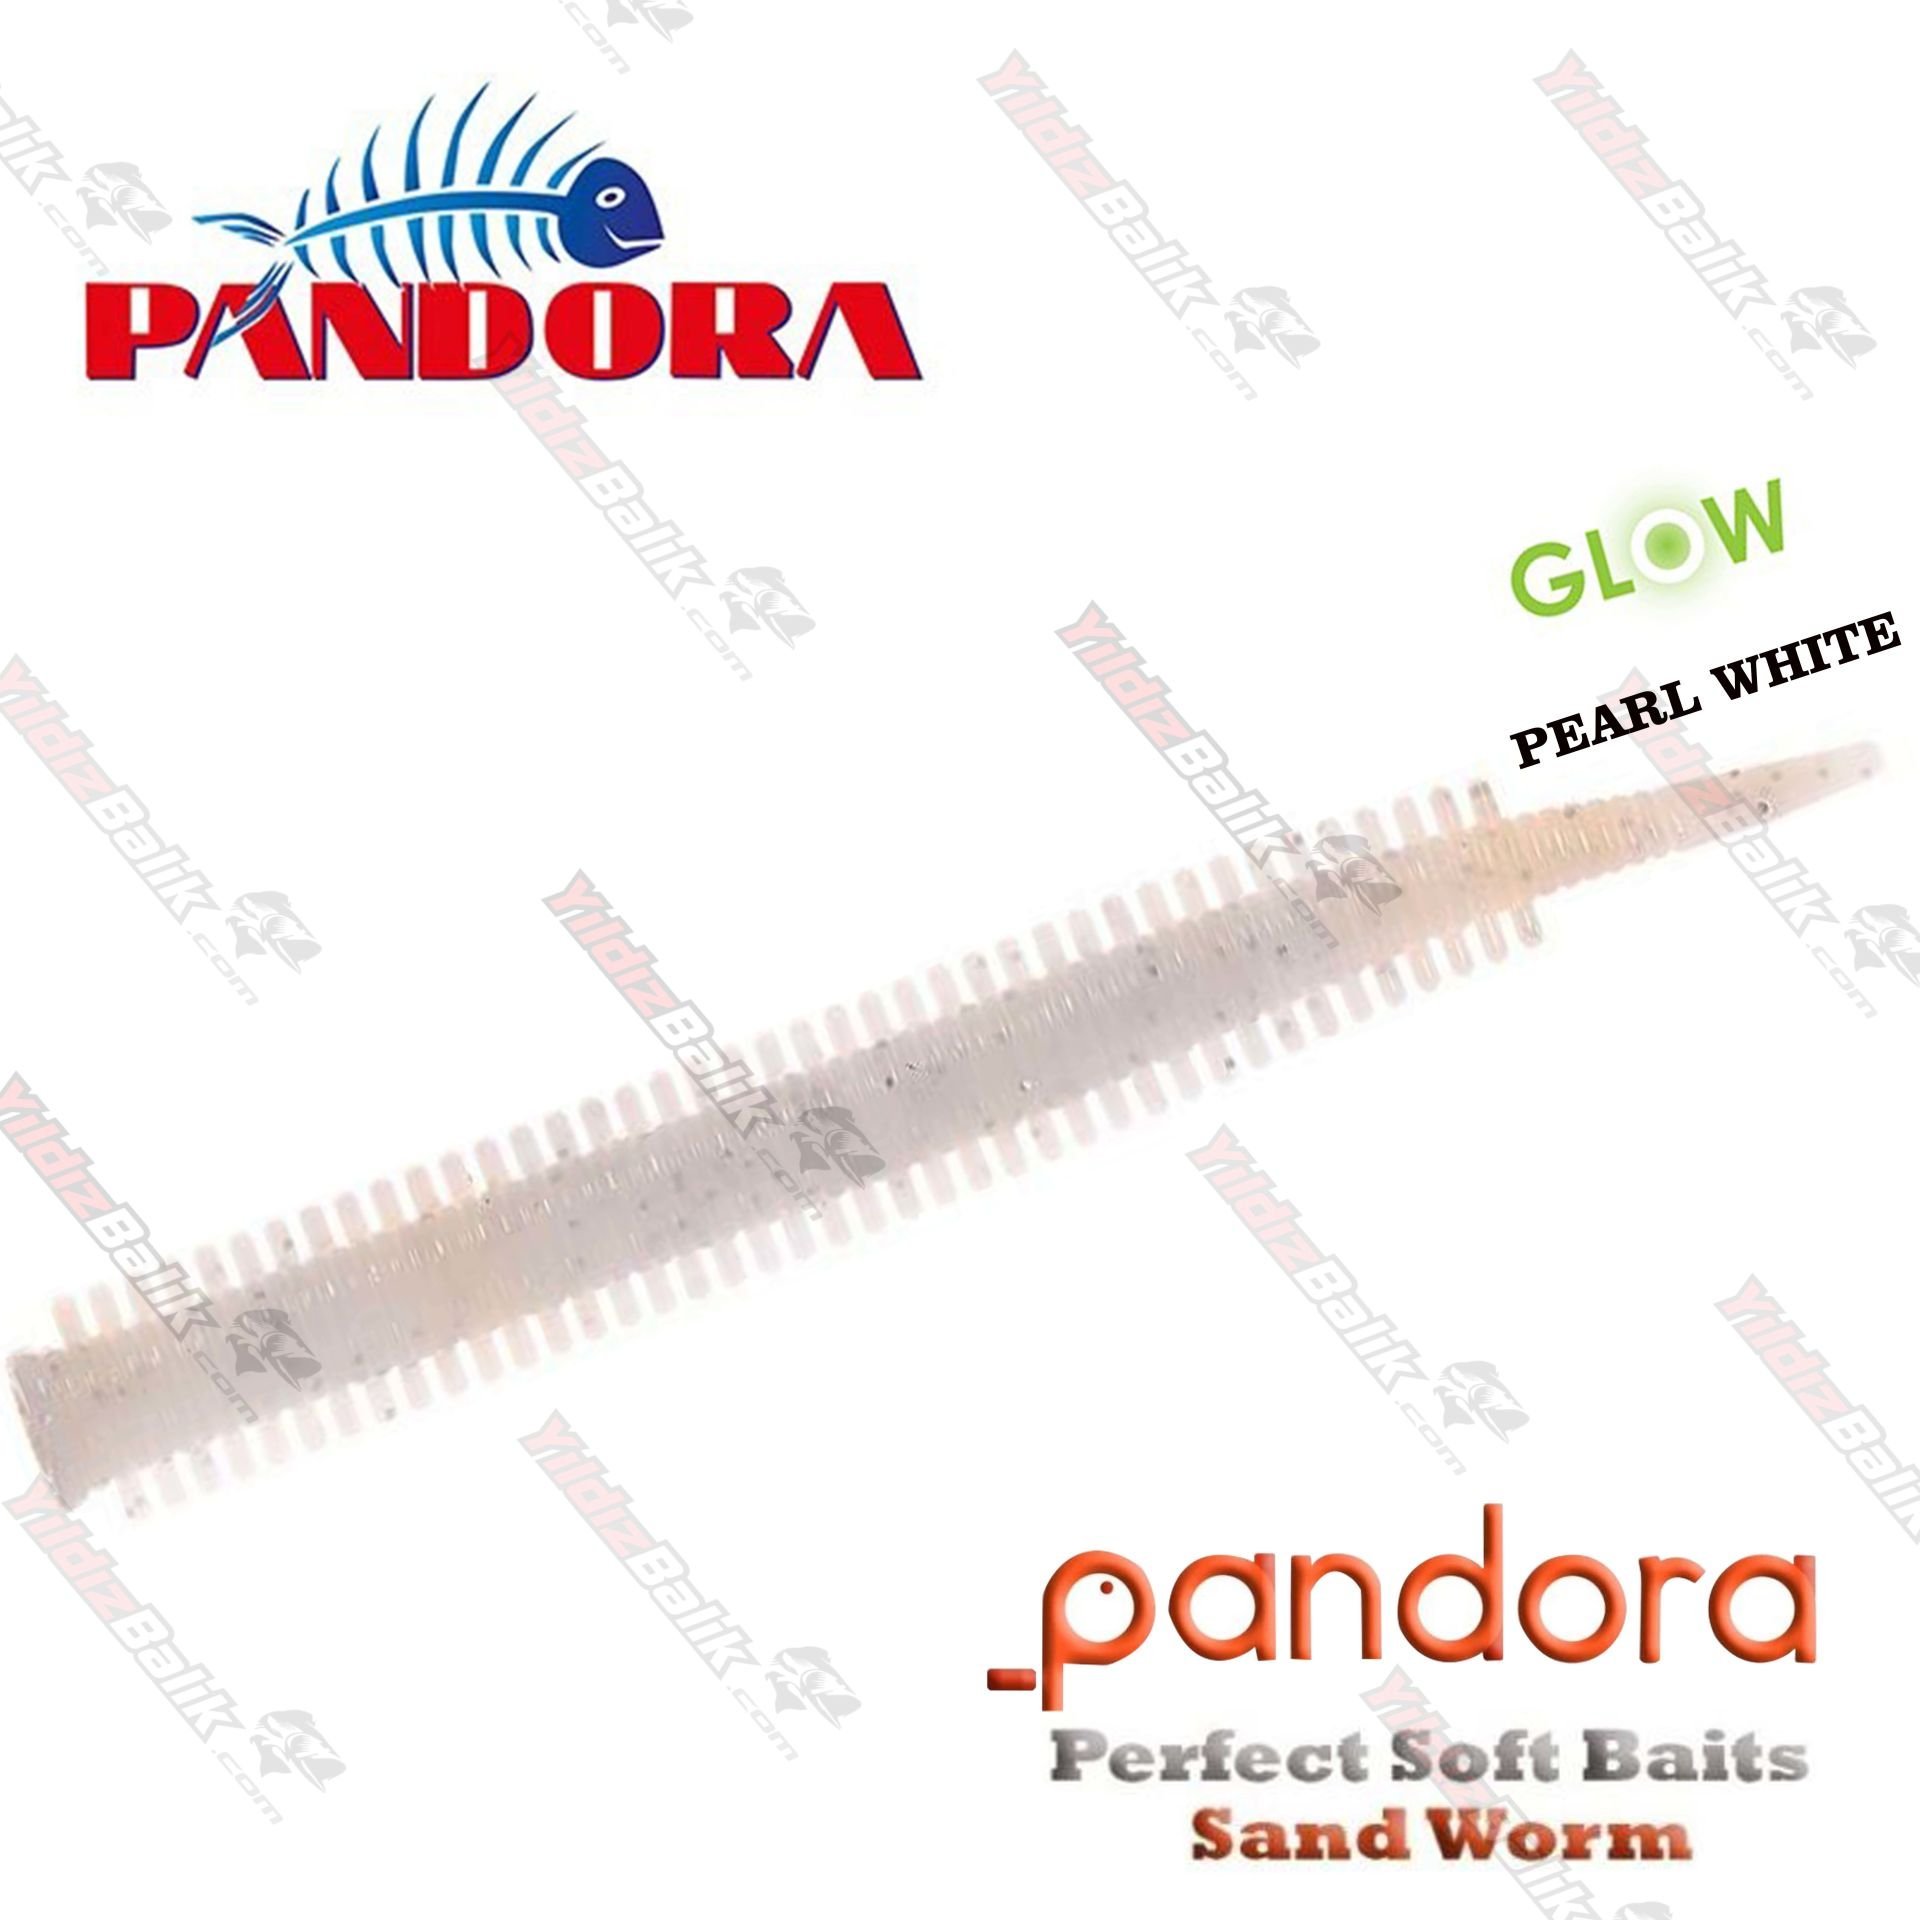 Pandora Perfect Soft Baits Sandworm 7 cm PEARL WHITE Pandora